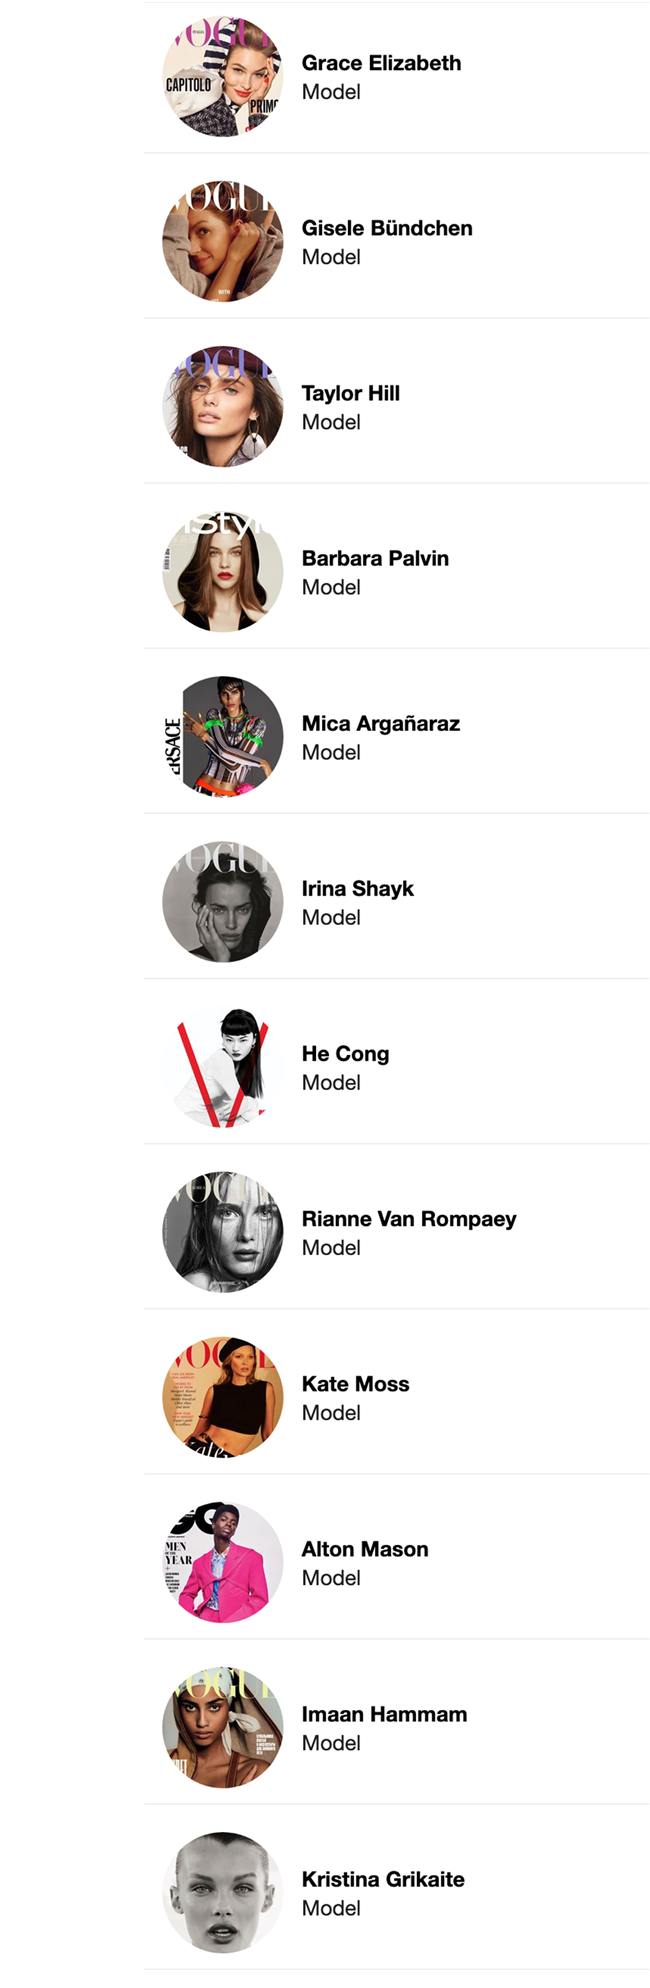 Models.com公布全球***佳时尚摄影师，国内仅两人上榜。